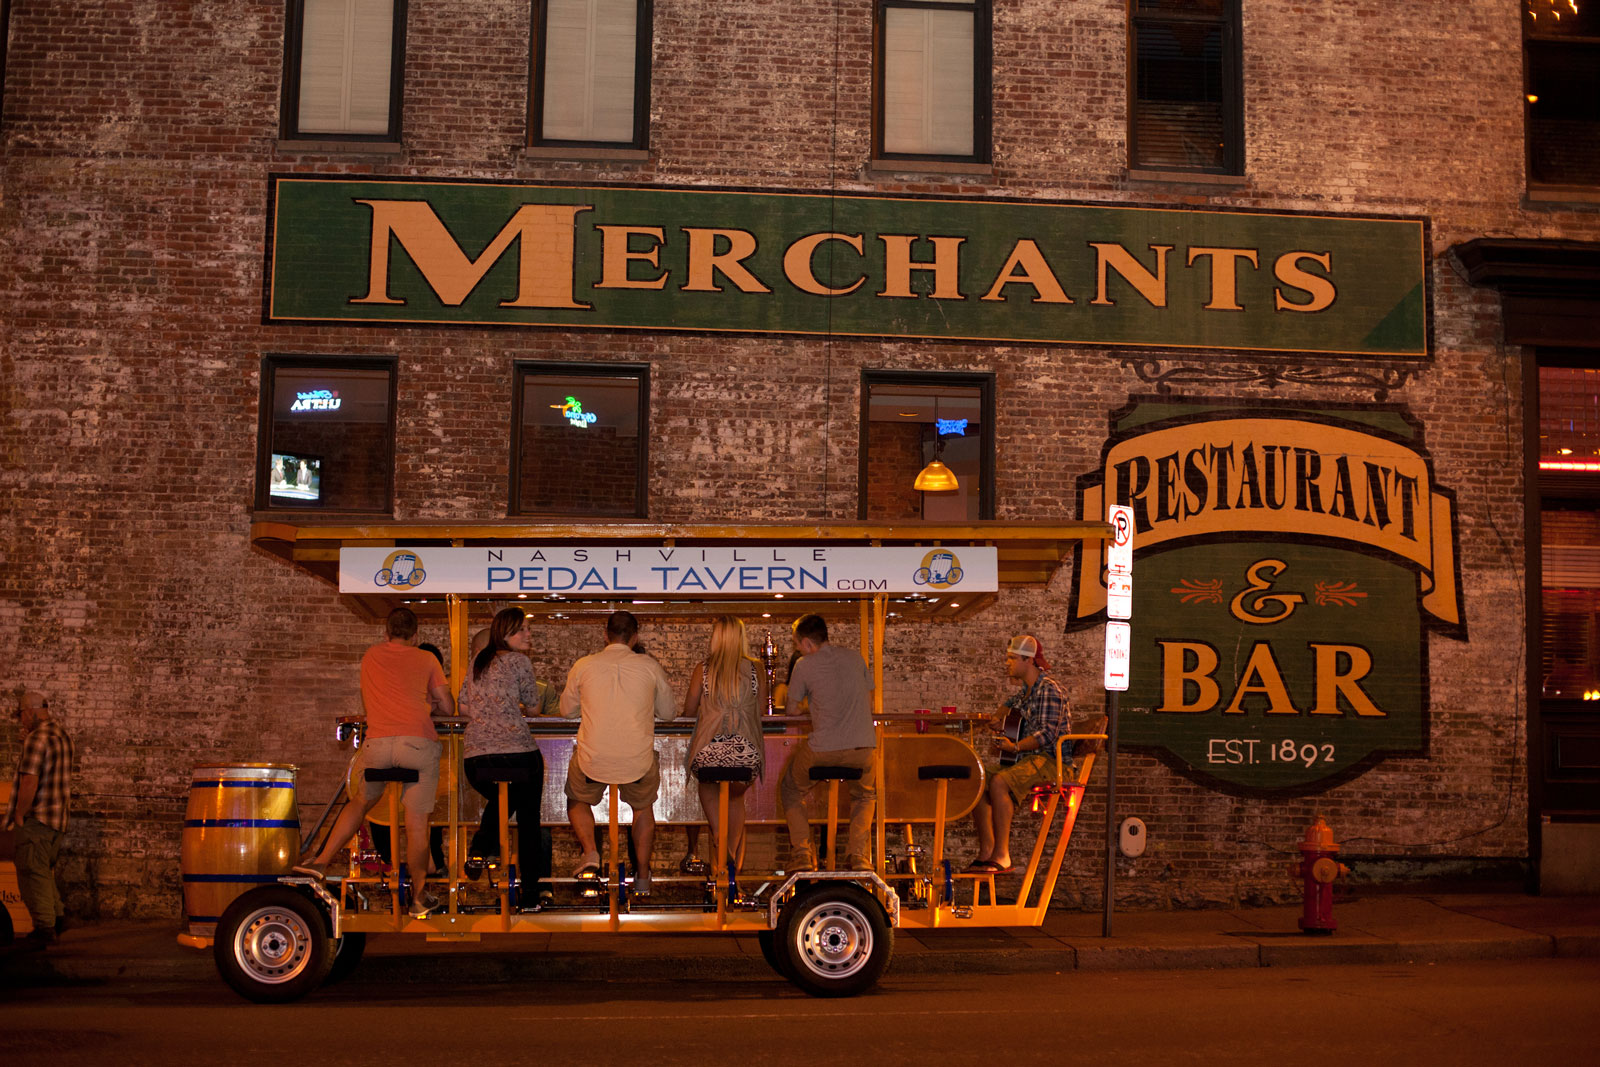 Pedal Tavern boat in front of Merchants Restaurant & Bar - nashville tourist attractions, nashville attractions, nashville activities